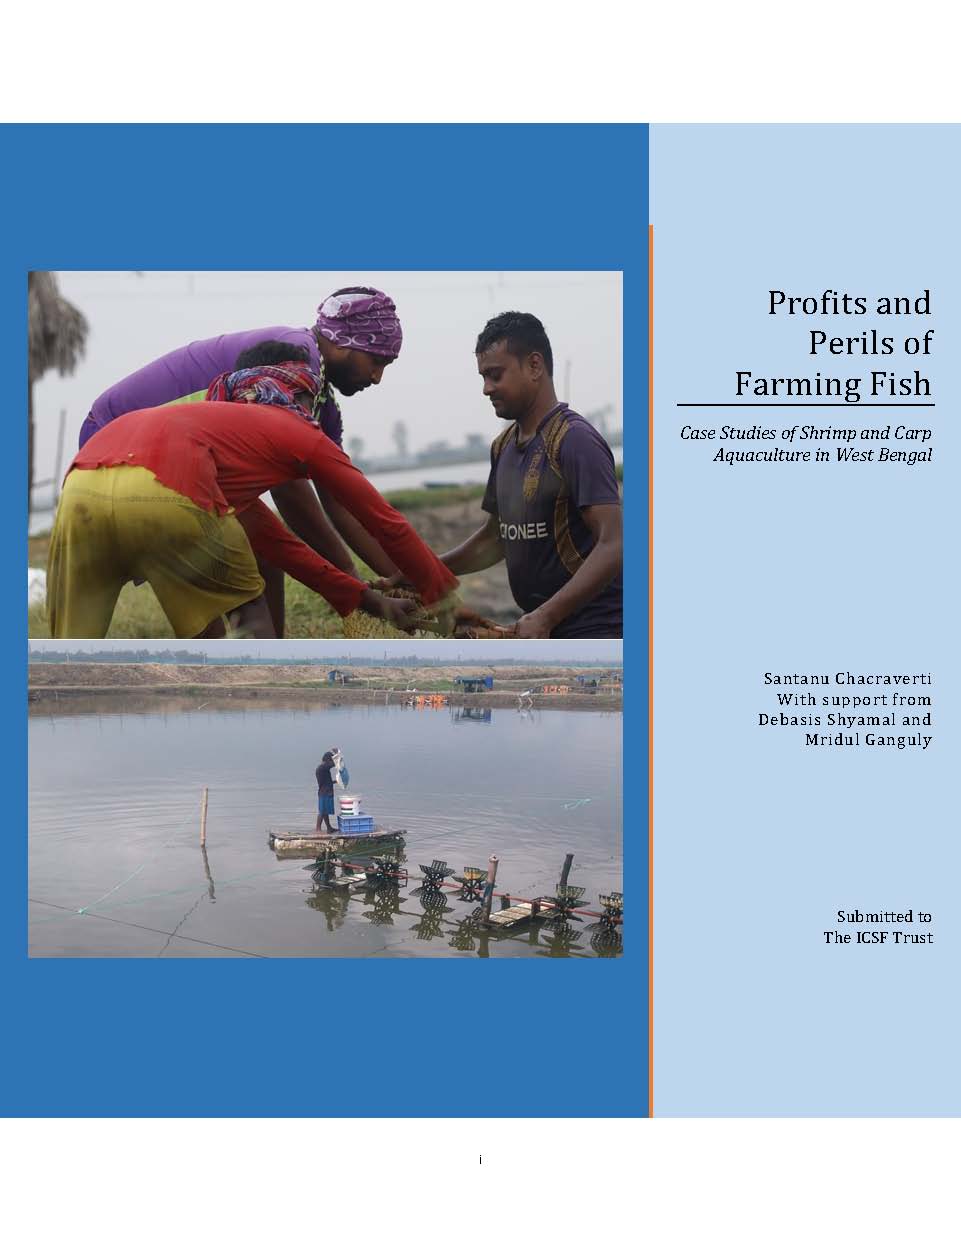 Profits and Perils of Farming Fish: Case Studies of Shrimp and Carp Aquaculture in West Bengal, Santanu Chacraverti, 2022